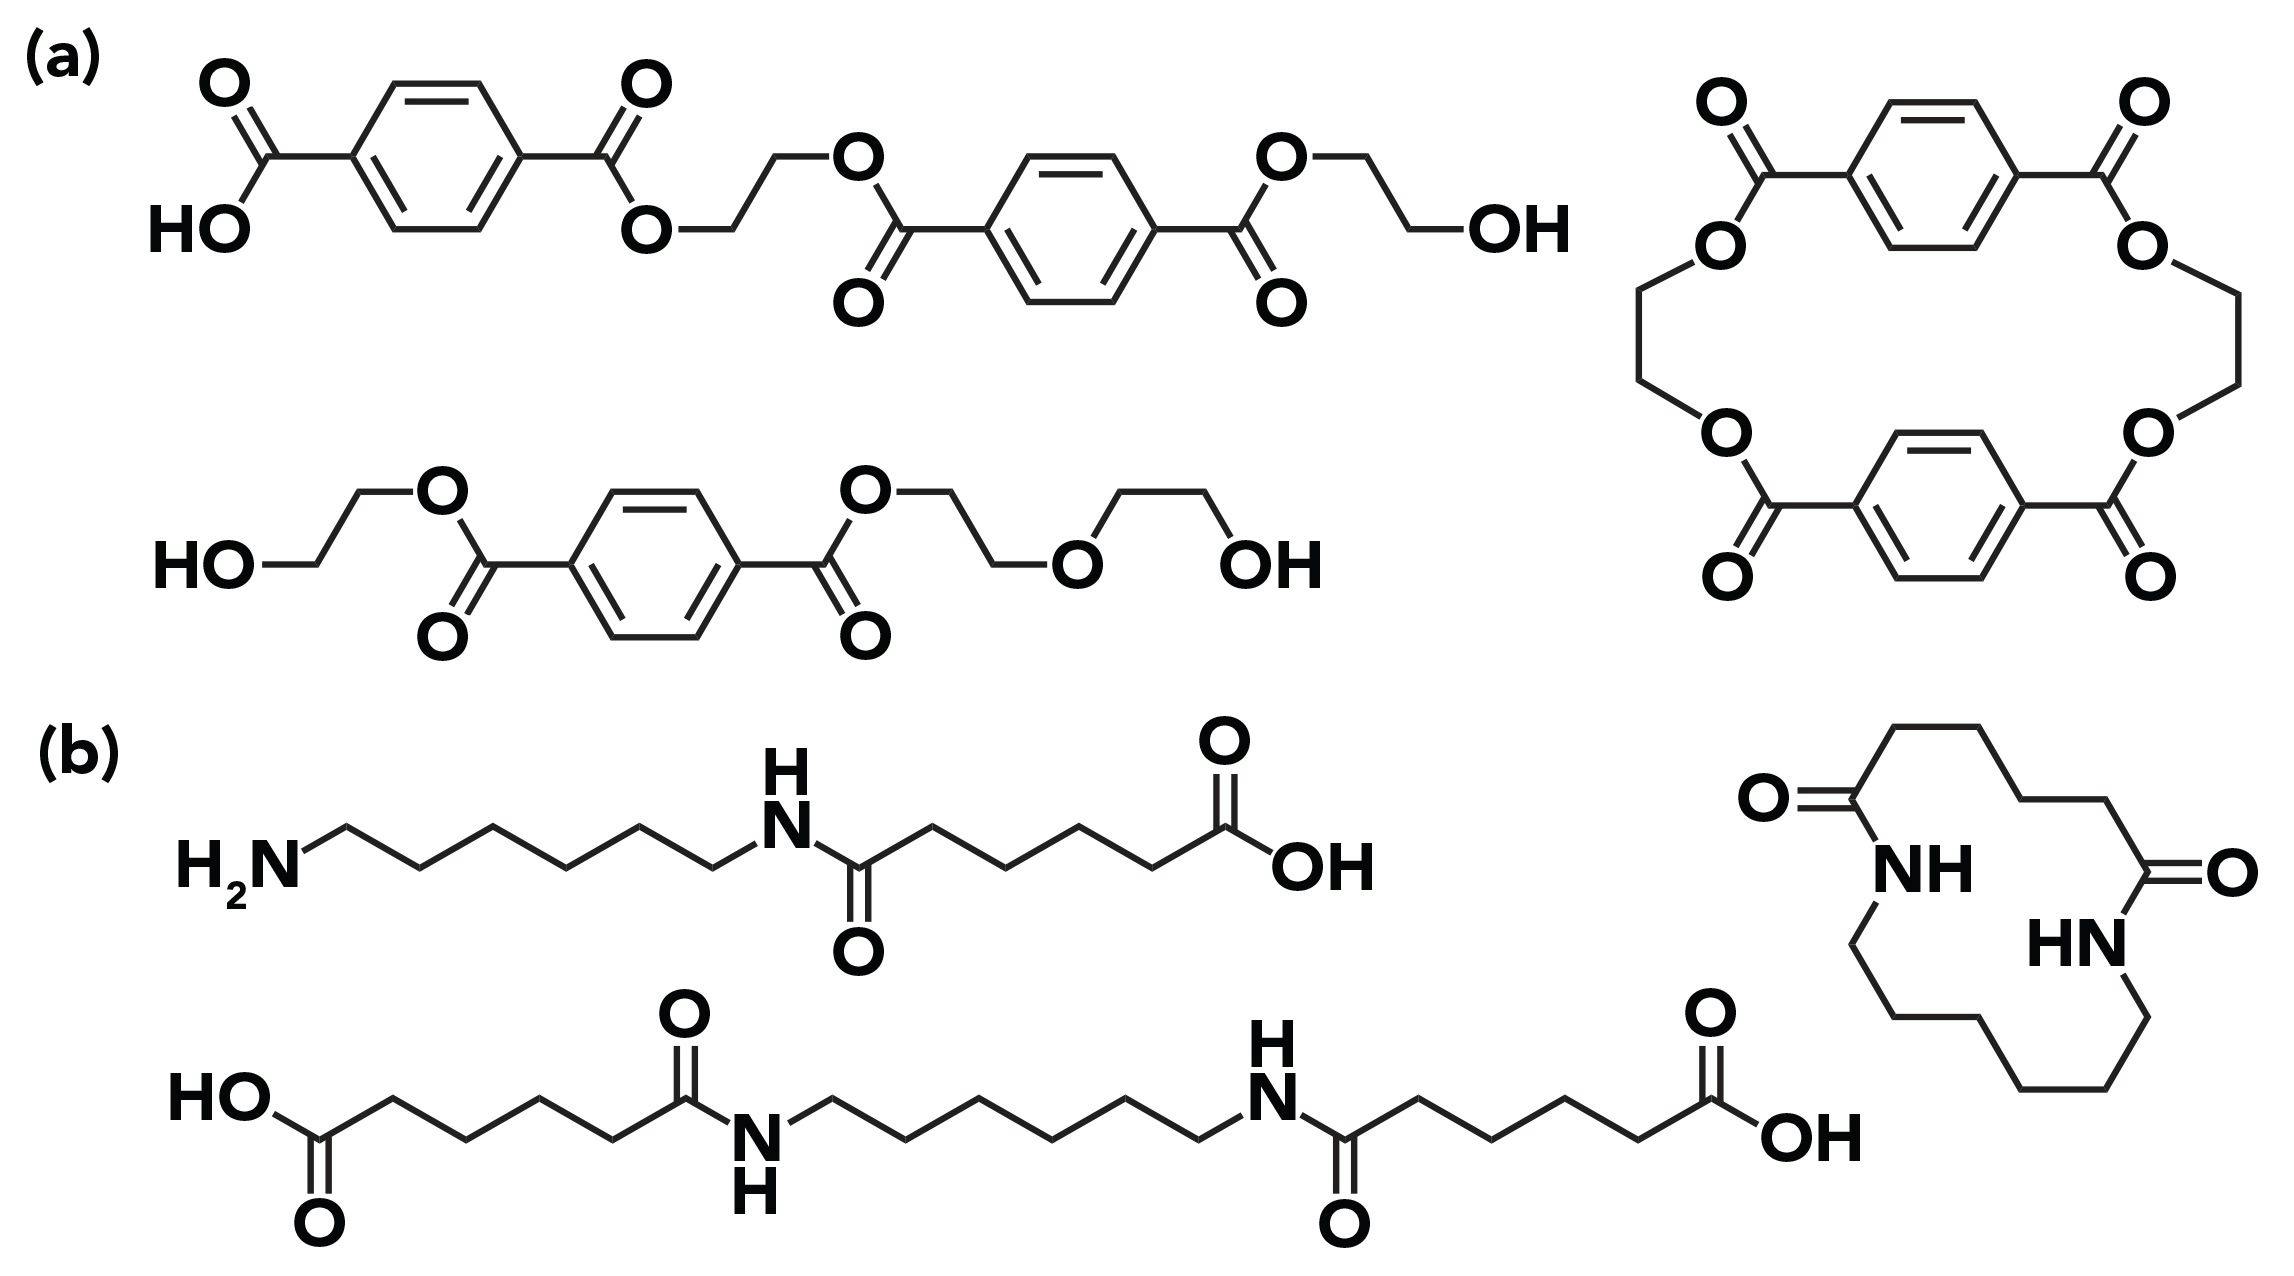 Figure 1: Examples of oligomers/degradants from plastic resins: (a) polyethylene terephthalate oligomers; (b) nylon 6,6 oligomers.